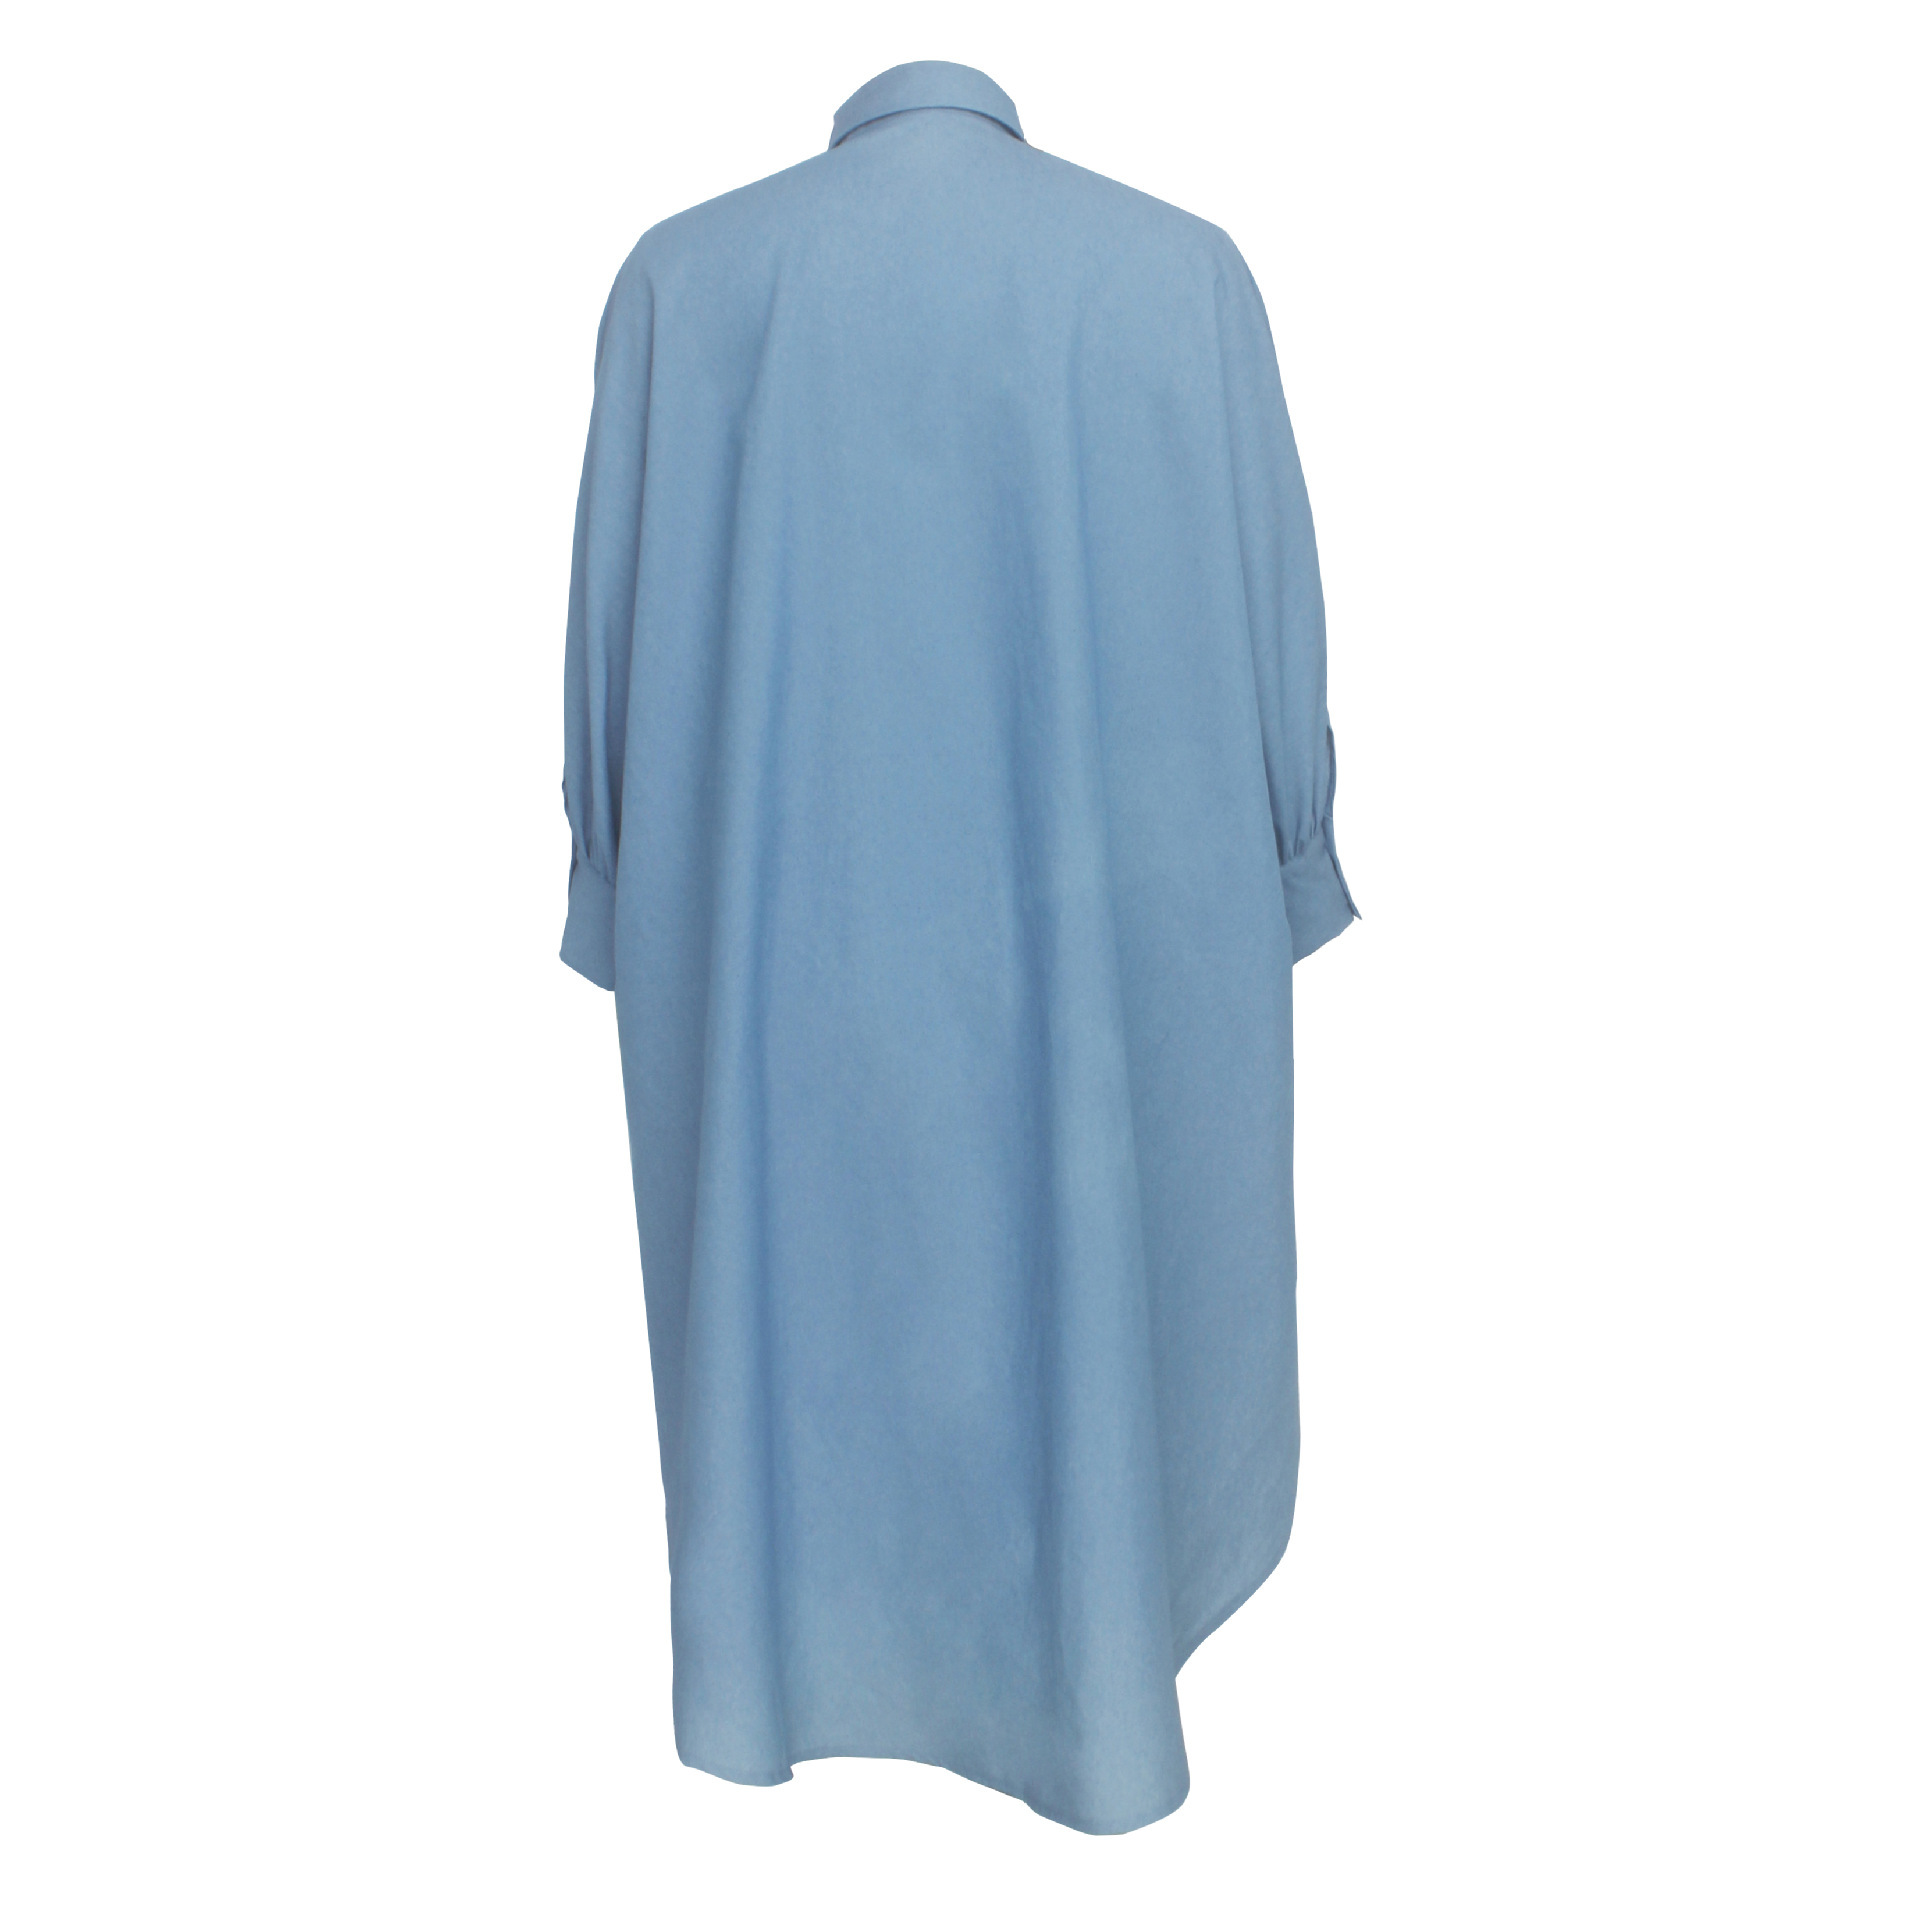 Blusa de mezclilla larga con solapa manga larga parte delantera corta suelta y espalda larga azul NSQYT99020